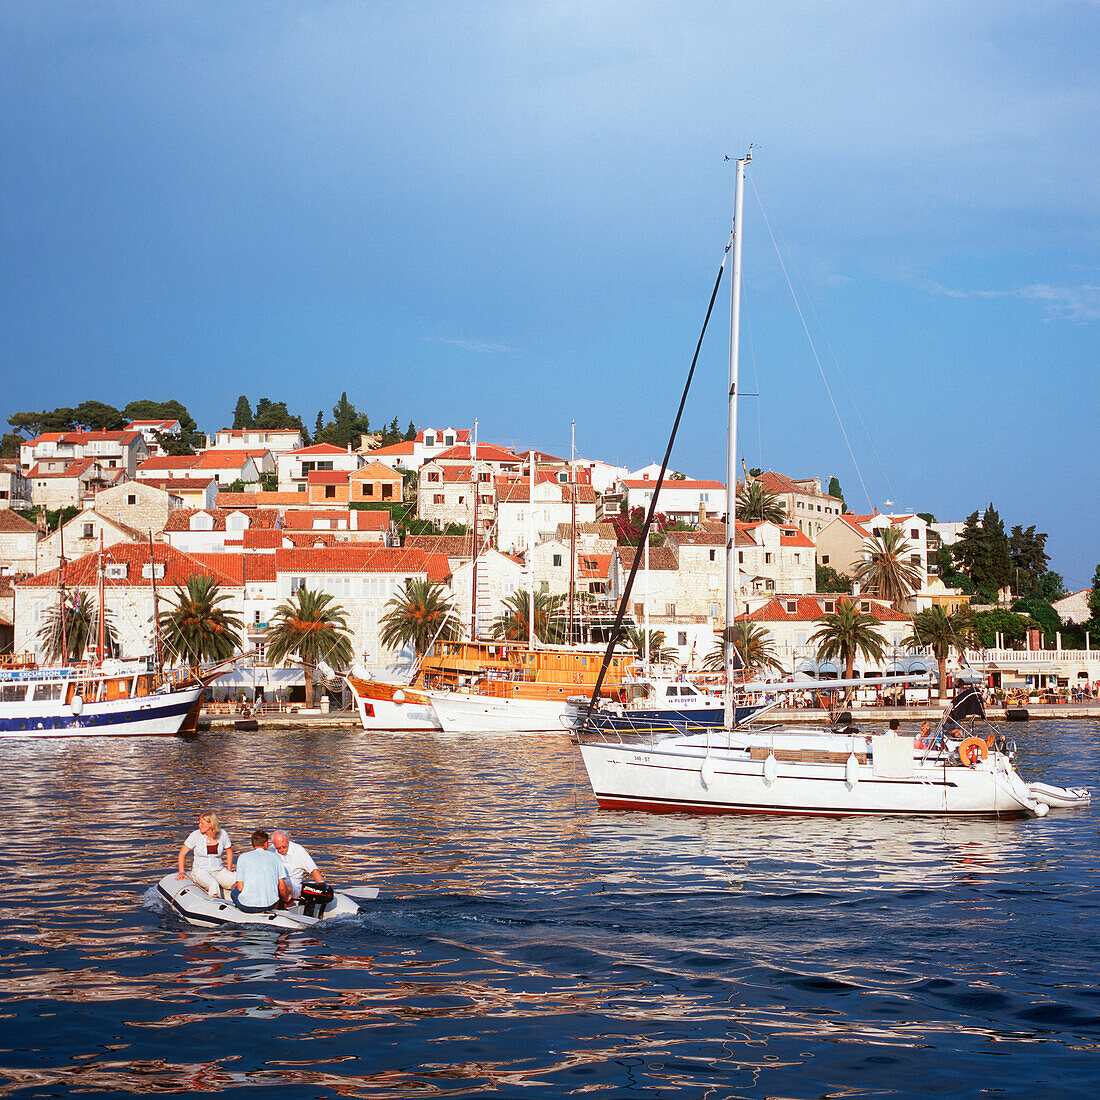 Promenade of Hvar, croatia, dalmatia, adriatic sea, coast, water, old houses, ancient, anchored ships, harbor, sightseeing, travel, vacation, holiday, trip, island, tourism, beautiful weather, sunshine, summer